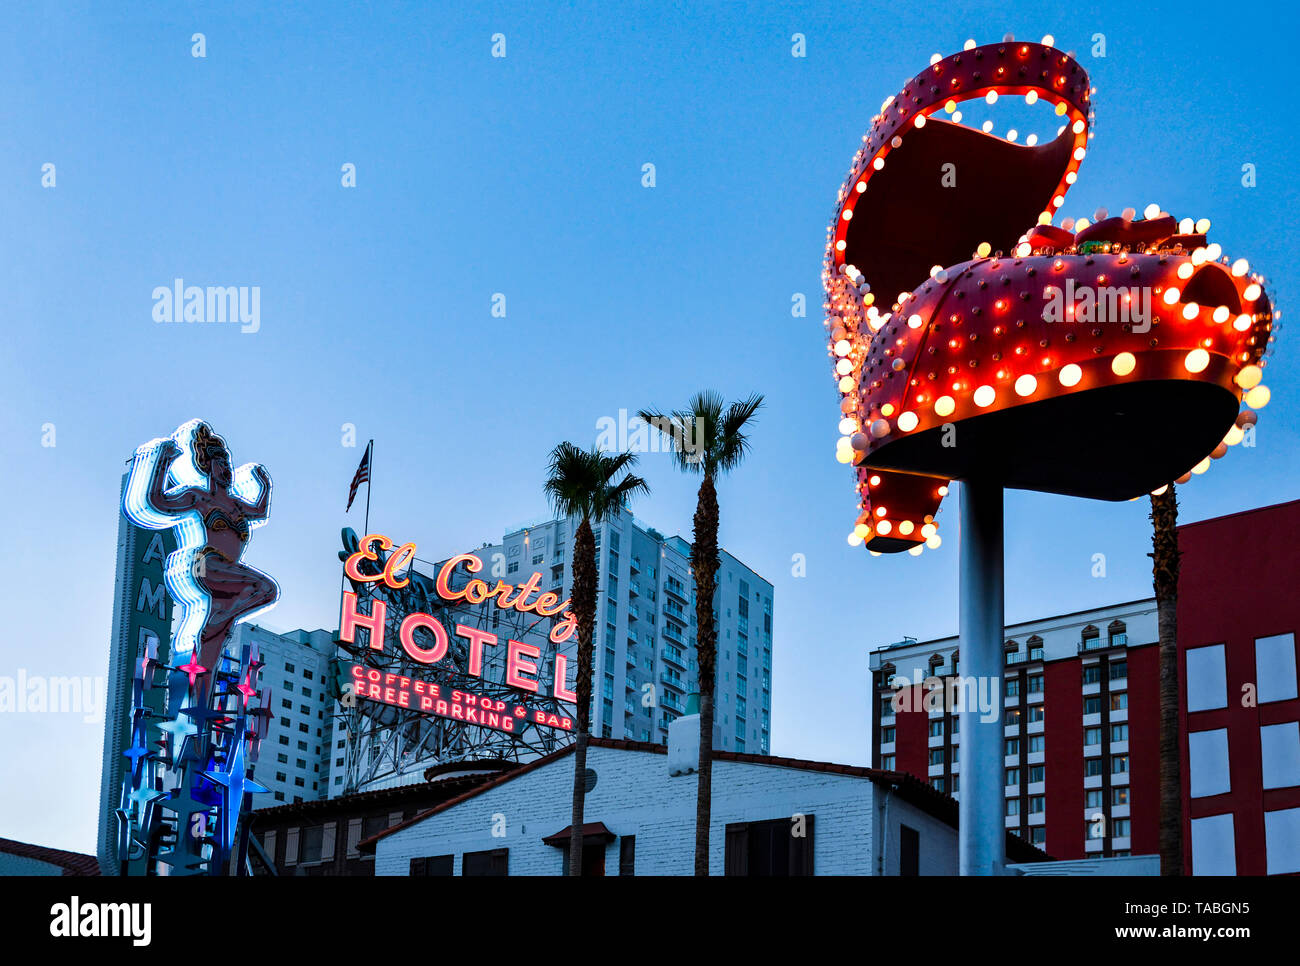 Gli illuminati tacco alto scarpa al tramonto su Fremont Street, Las Vegas, Nevada Foto Stock